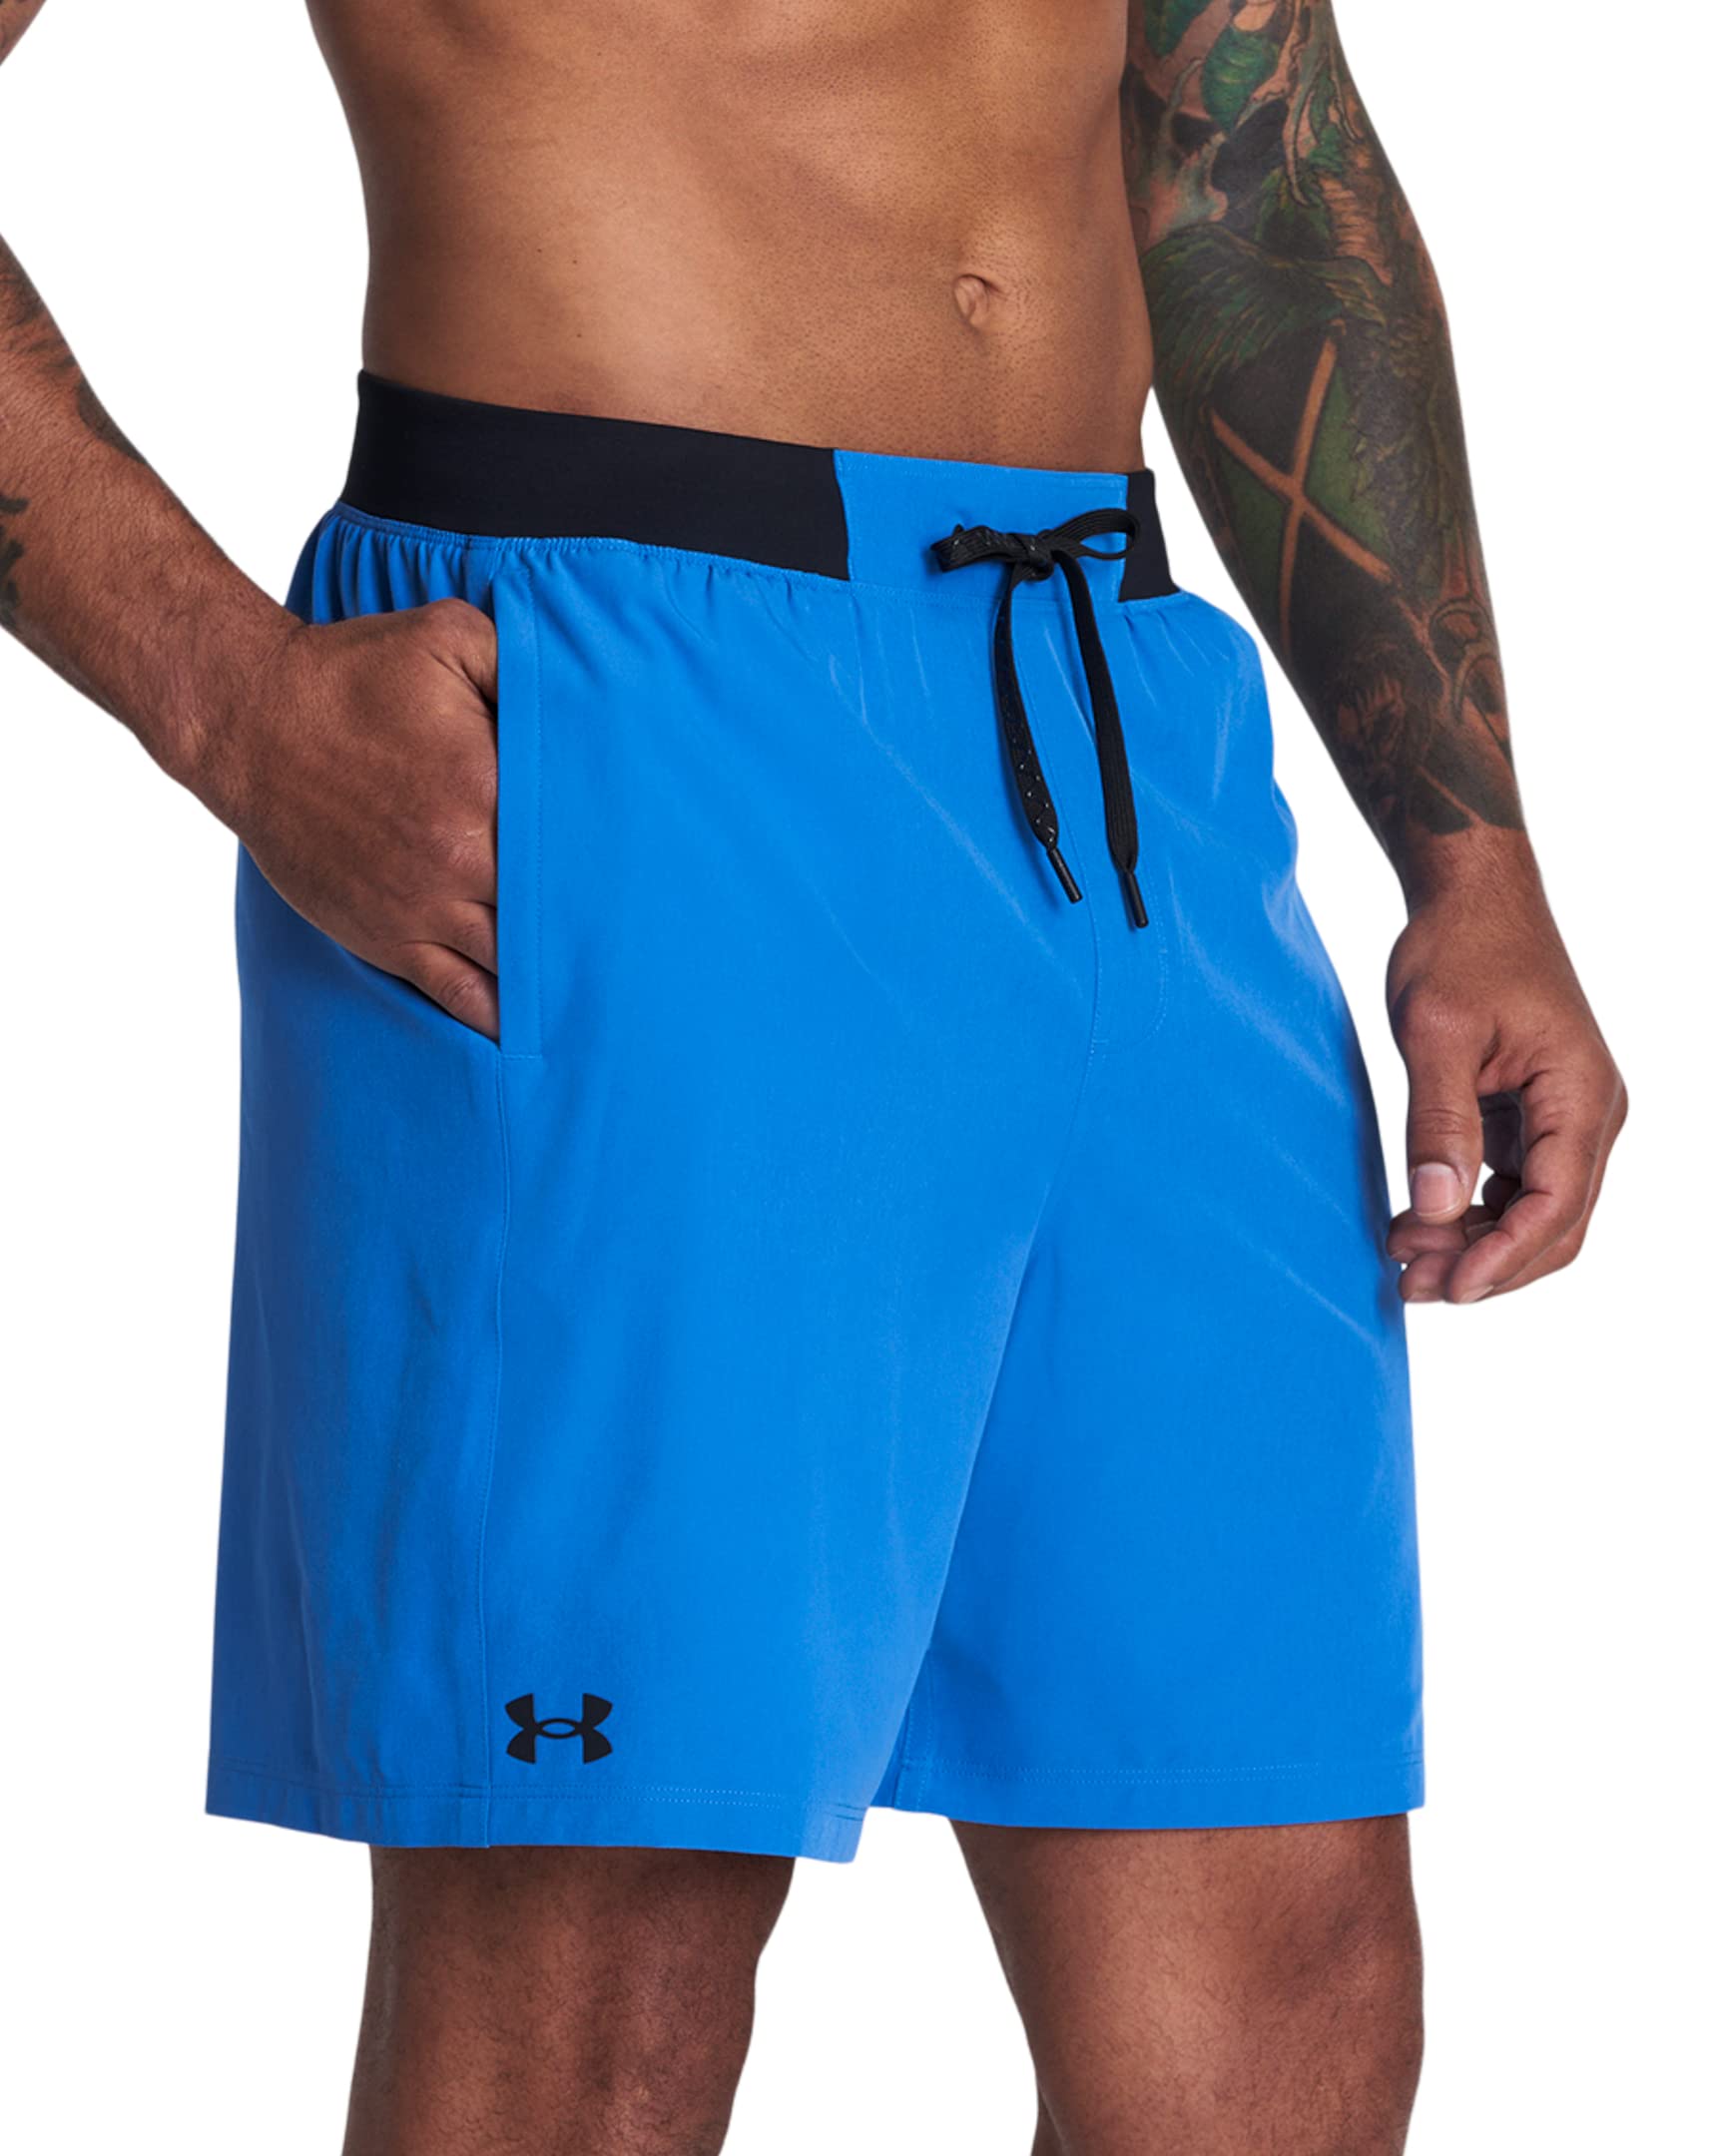 Under Armour Men's Standard Comfort Swim Trunks, Shorts with Drawstring Closure & Full Elastic Waistband